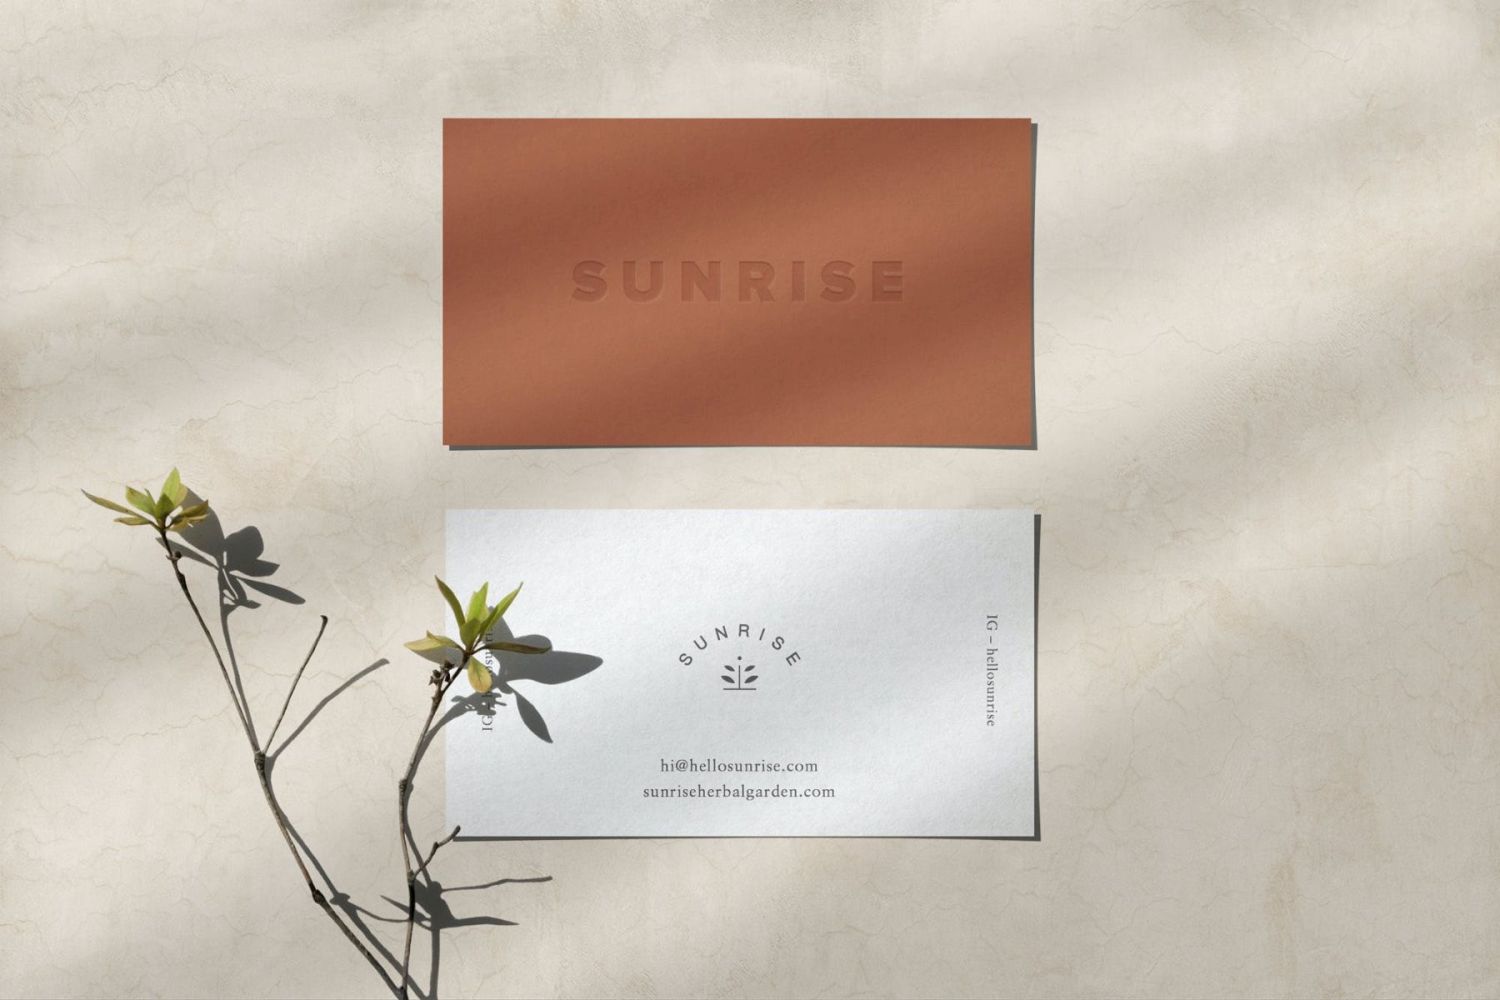 日出凸版名片样机 SUNRISE Letterpress Business Cards Mockup插图3